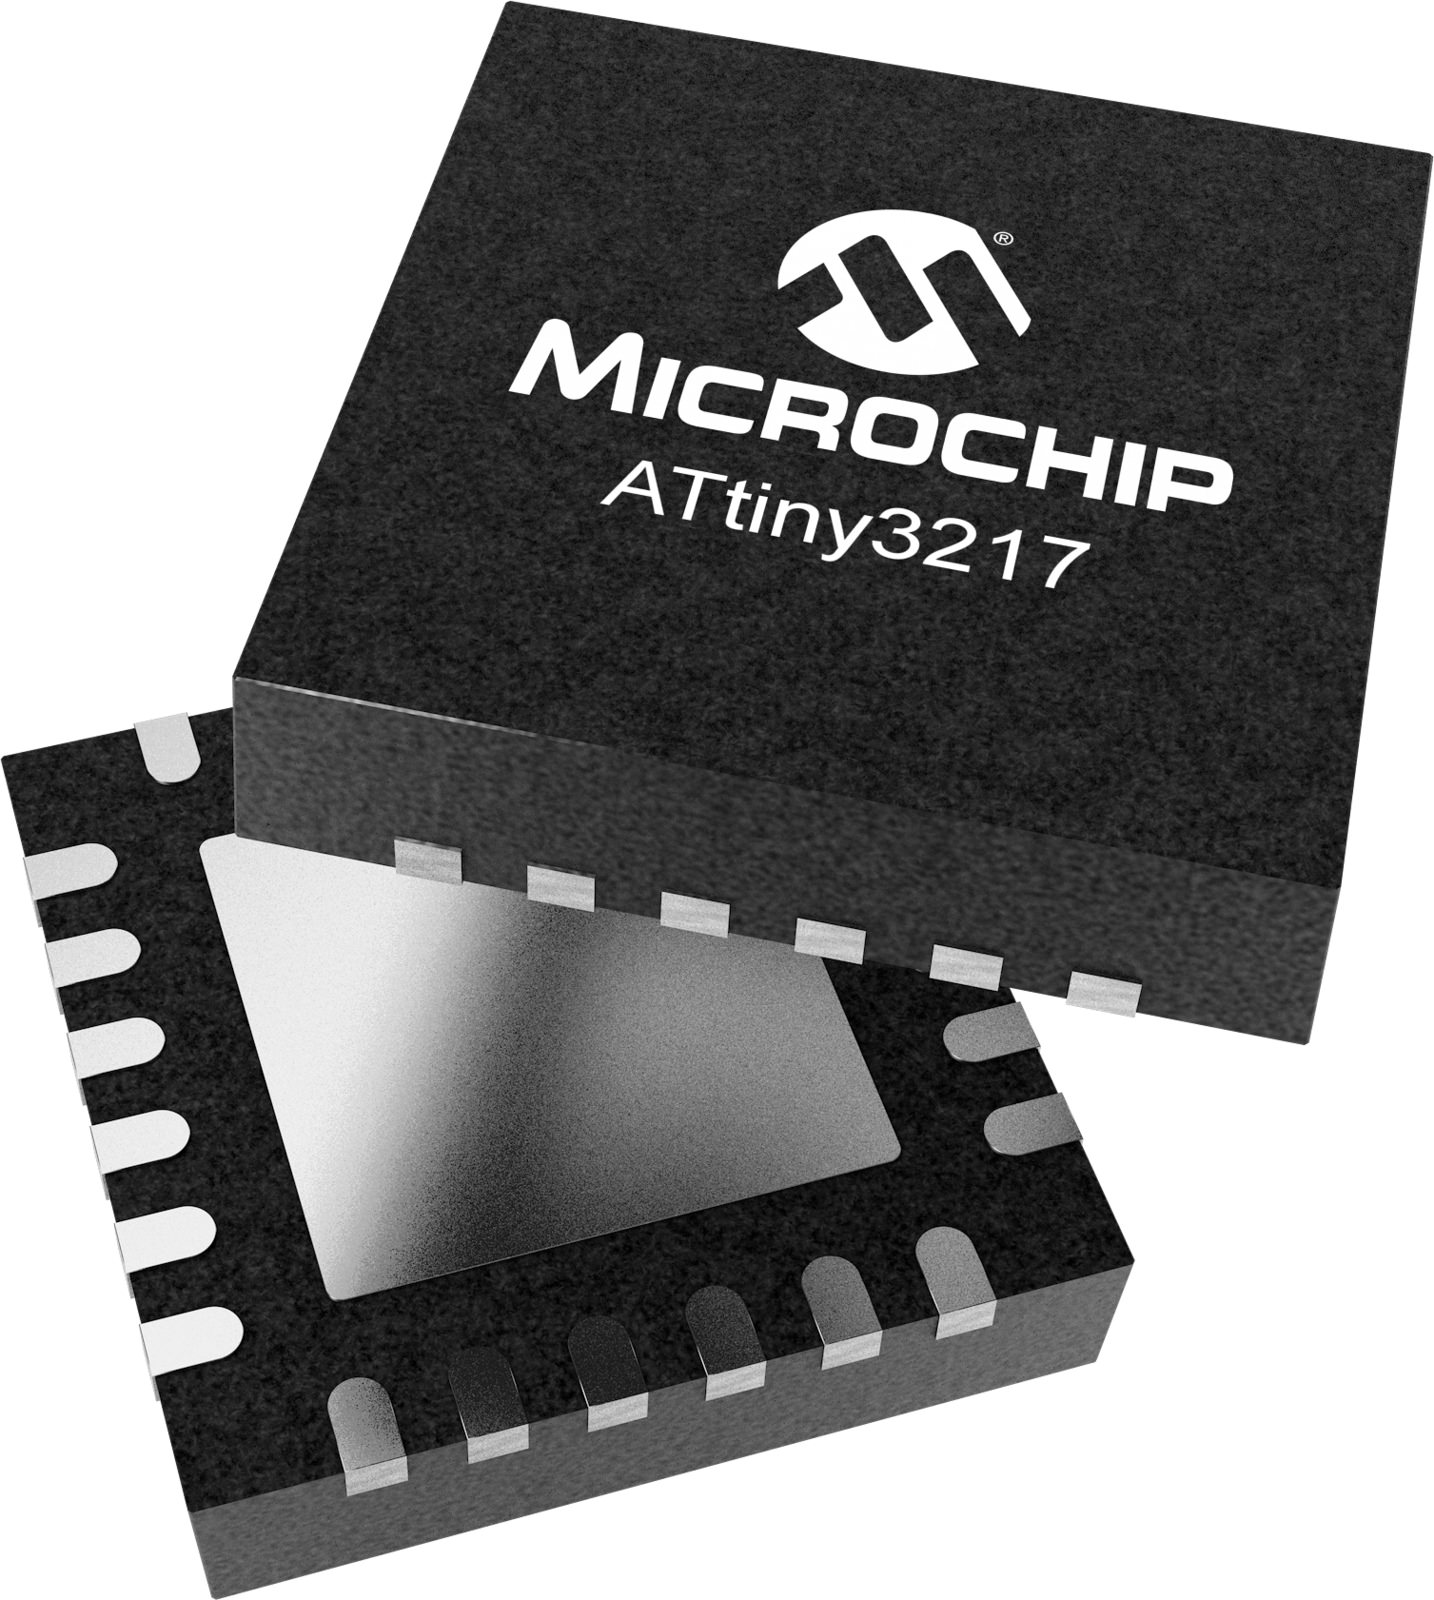 Microchip、高機能センサノードを実現する8ビット tinyAVR® MCU を発表